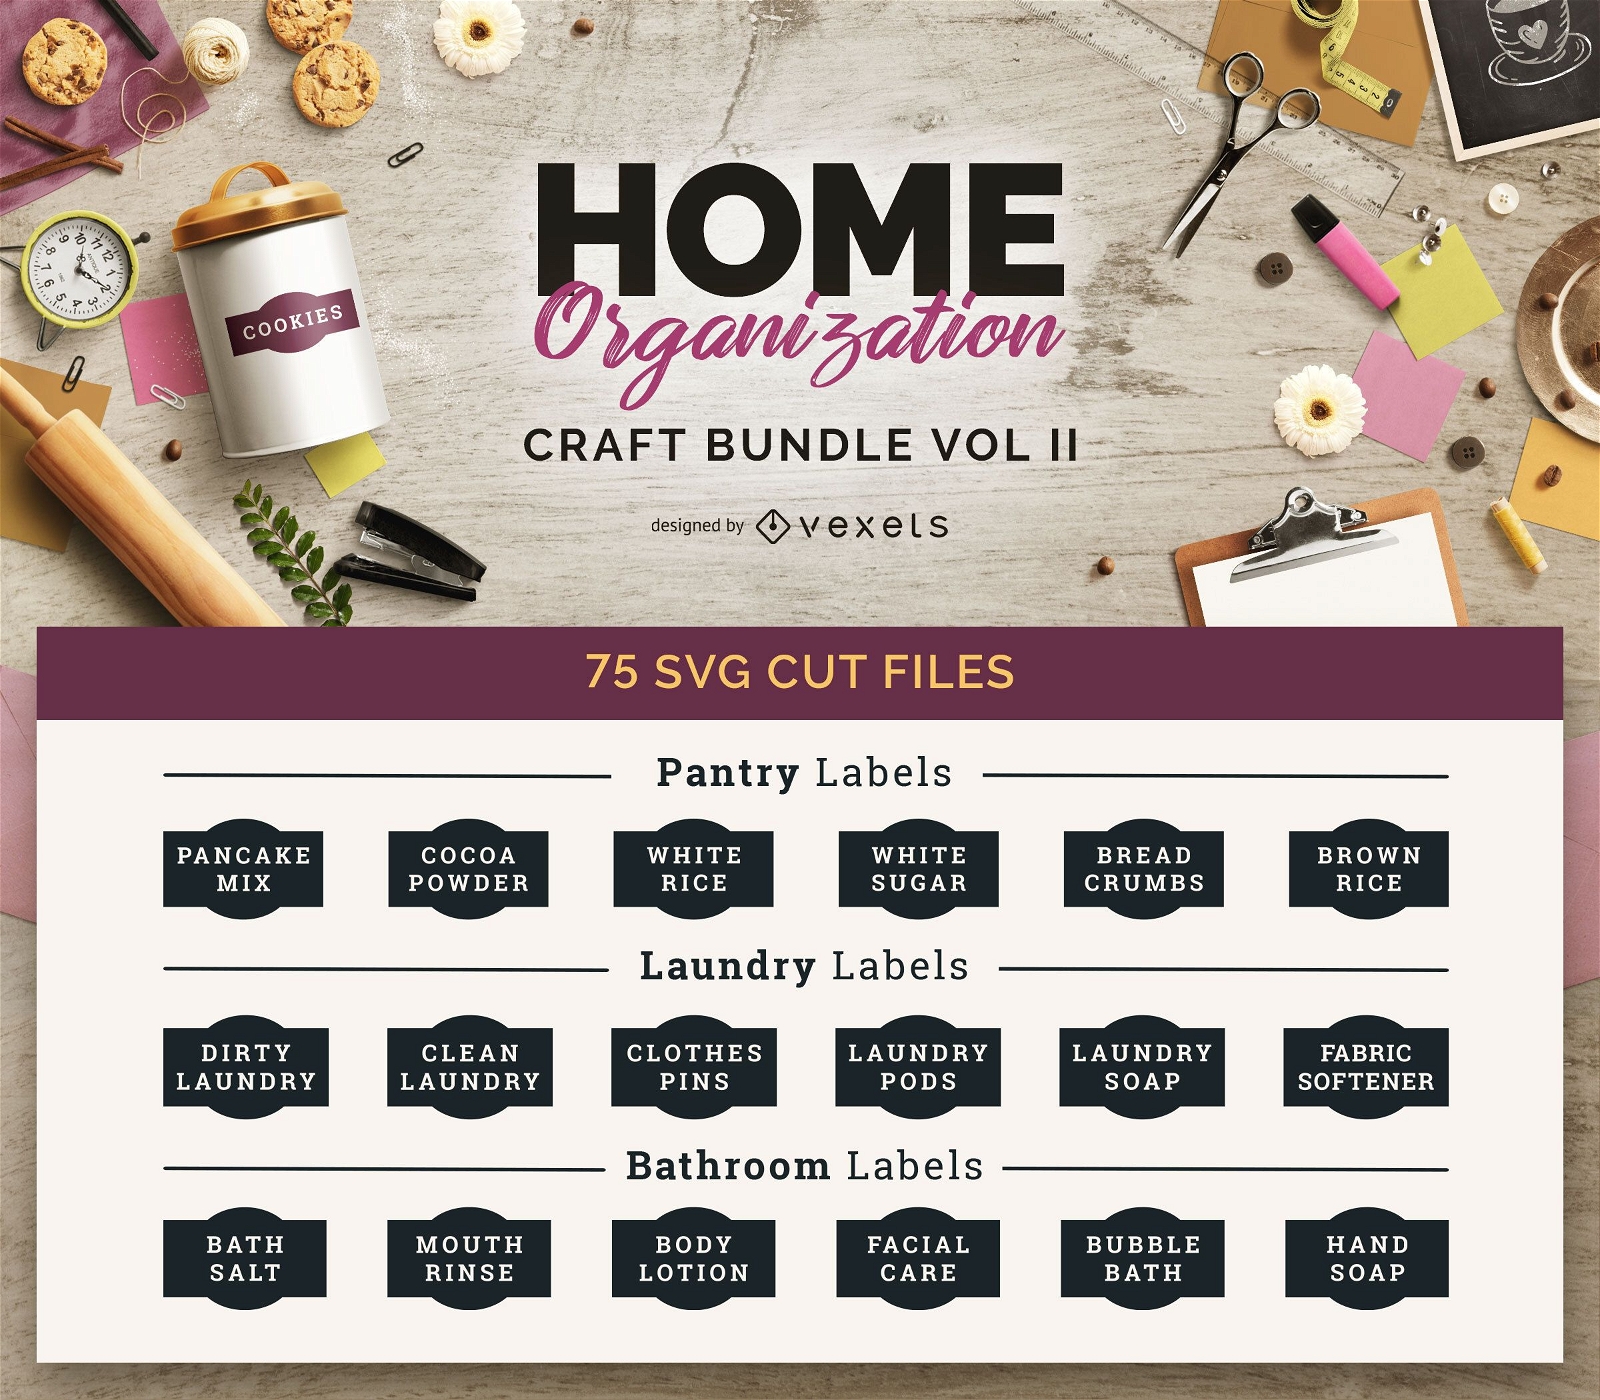 Home Organisation Craft Bundle Vol II